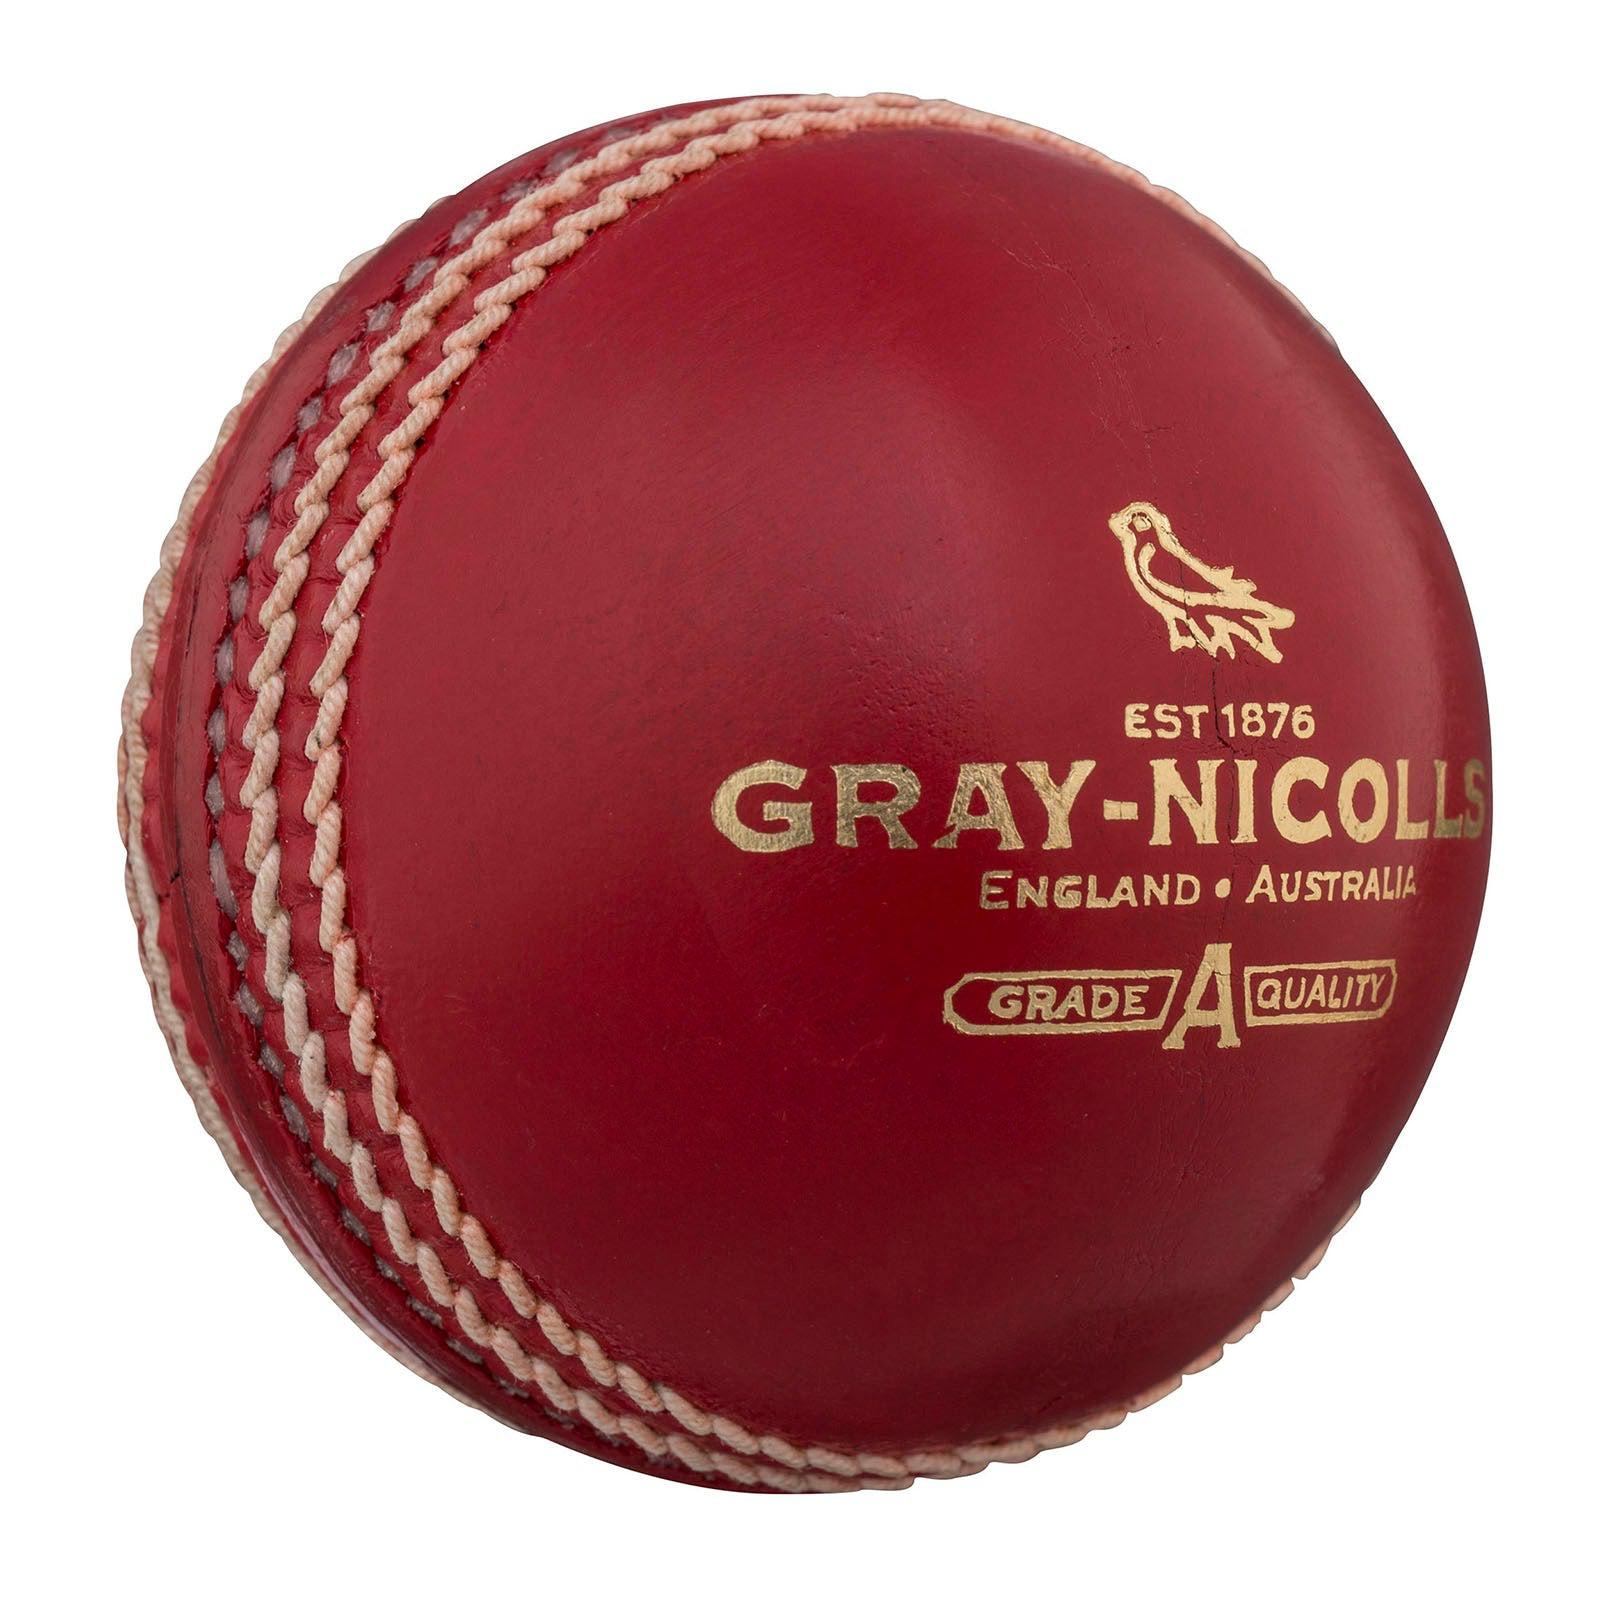 Gray Nicolls Crown Prestige 4 Pc Ball - Red 156g